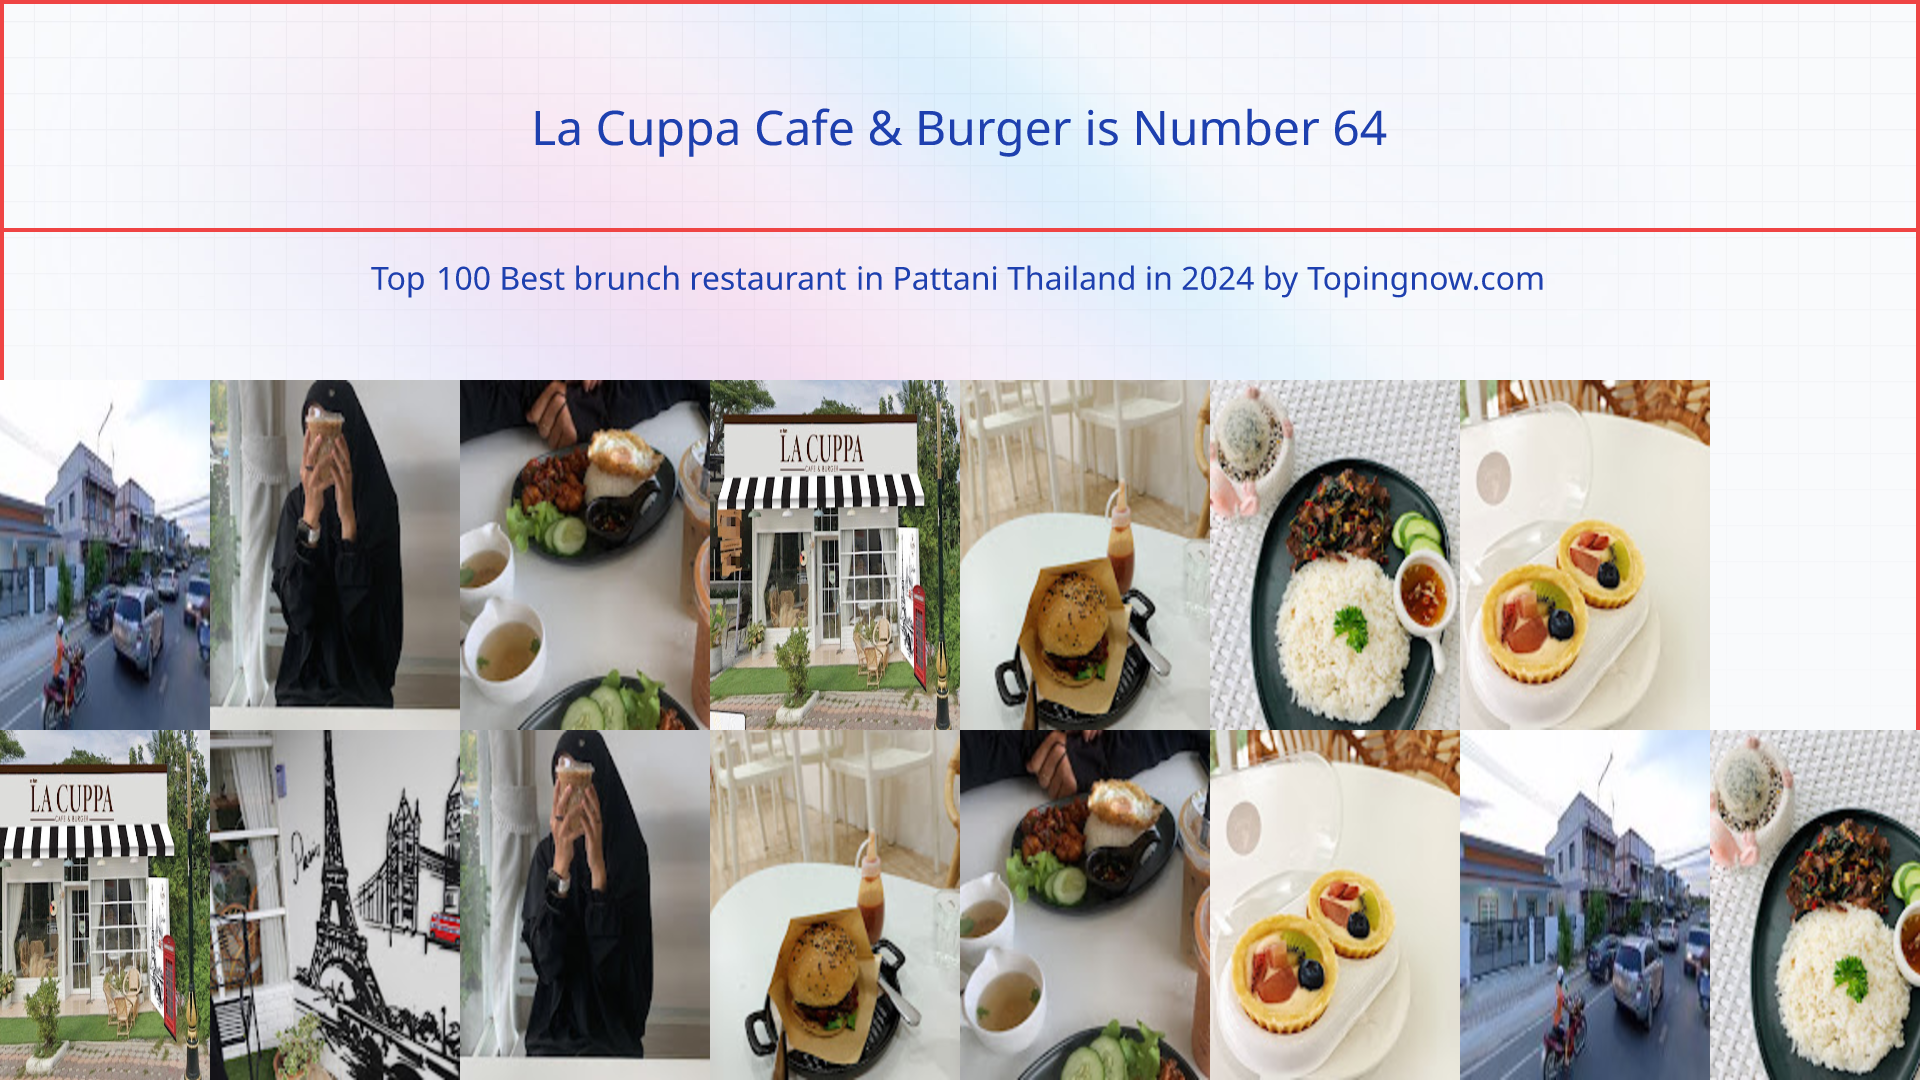 La Cuppa Cafe & Burger: Top 100 Best brunch restaurant in Pattani Thailand in 2024